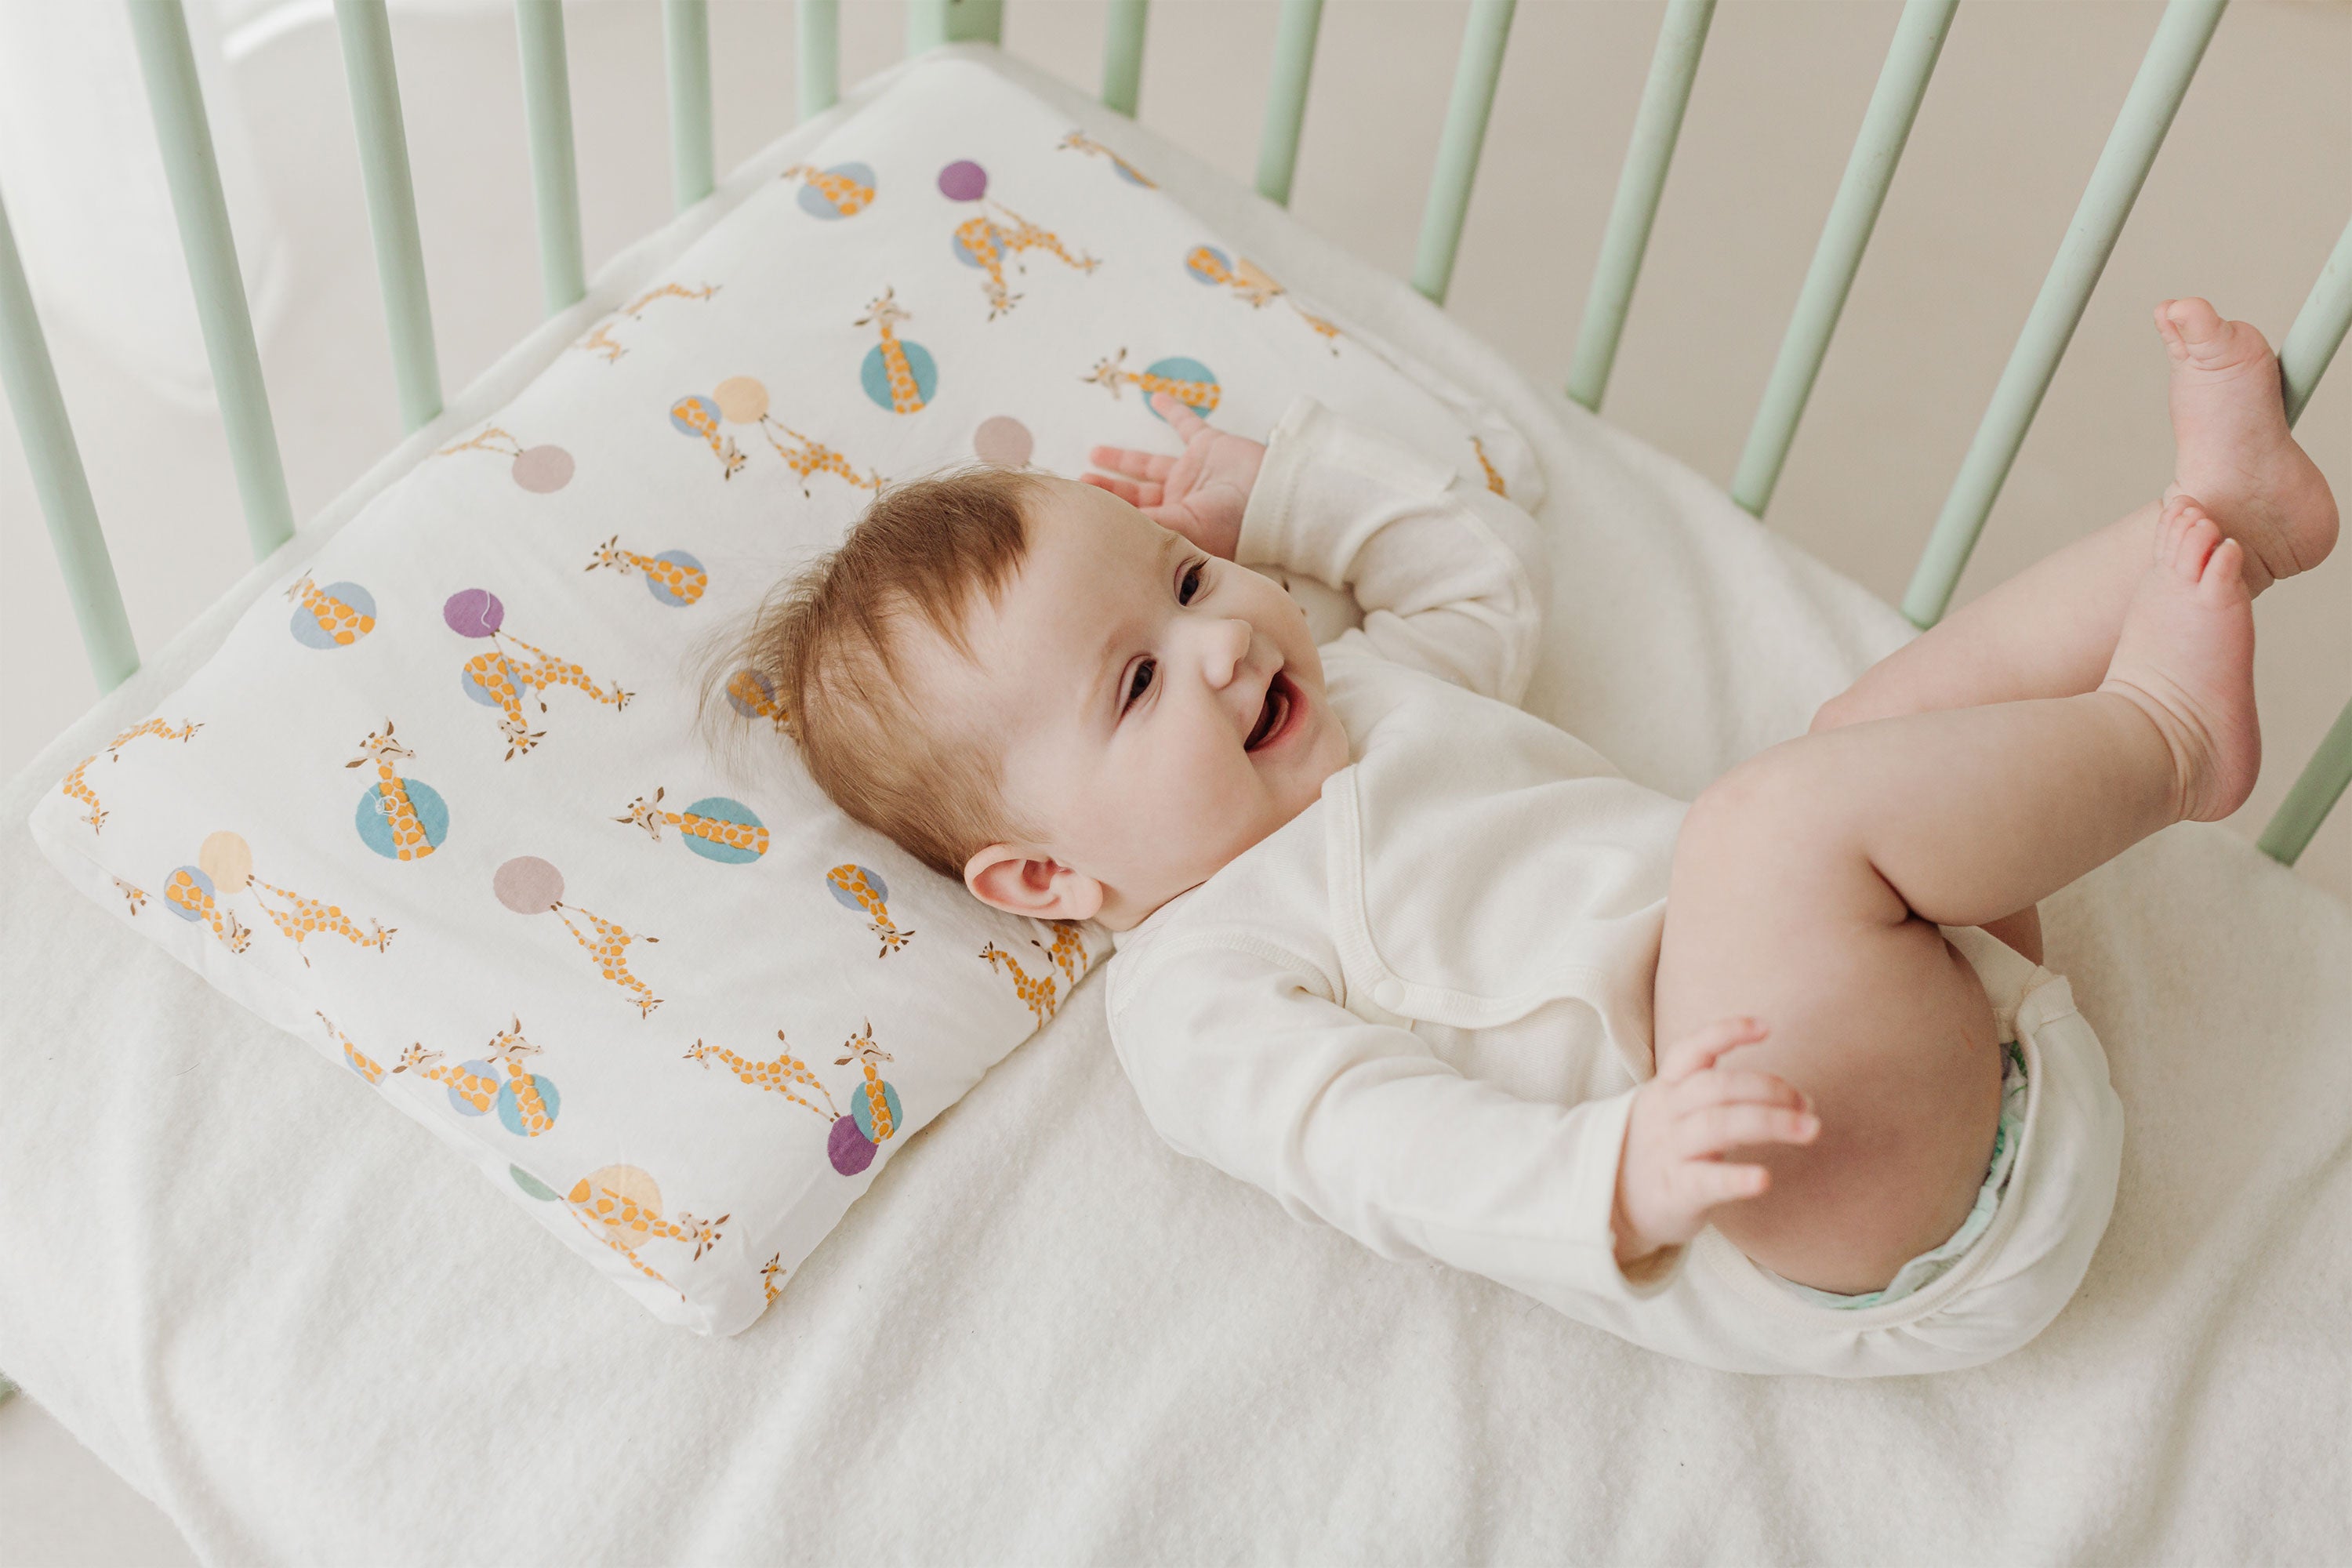 Toddler Pillow and Pillowcase (Bamboo Jersey, Medium) - Giraffe Shapes